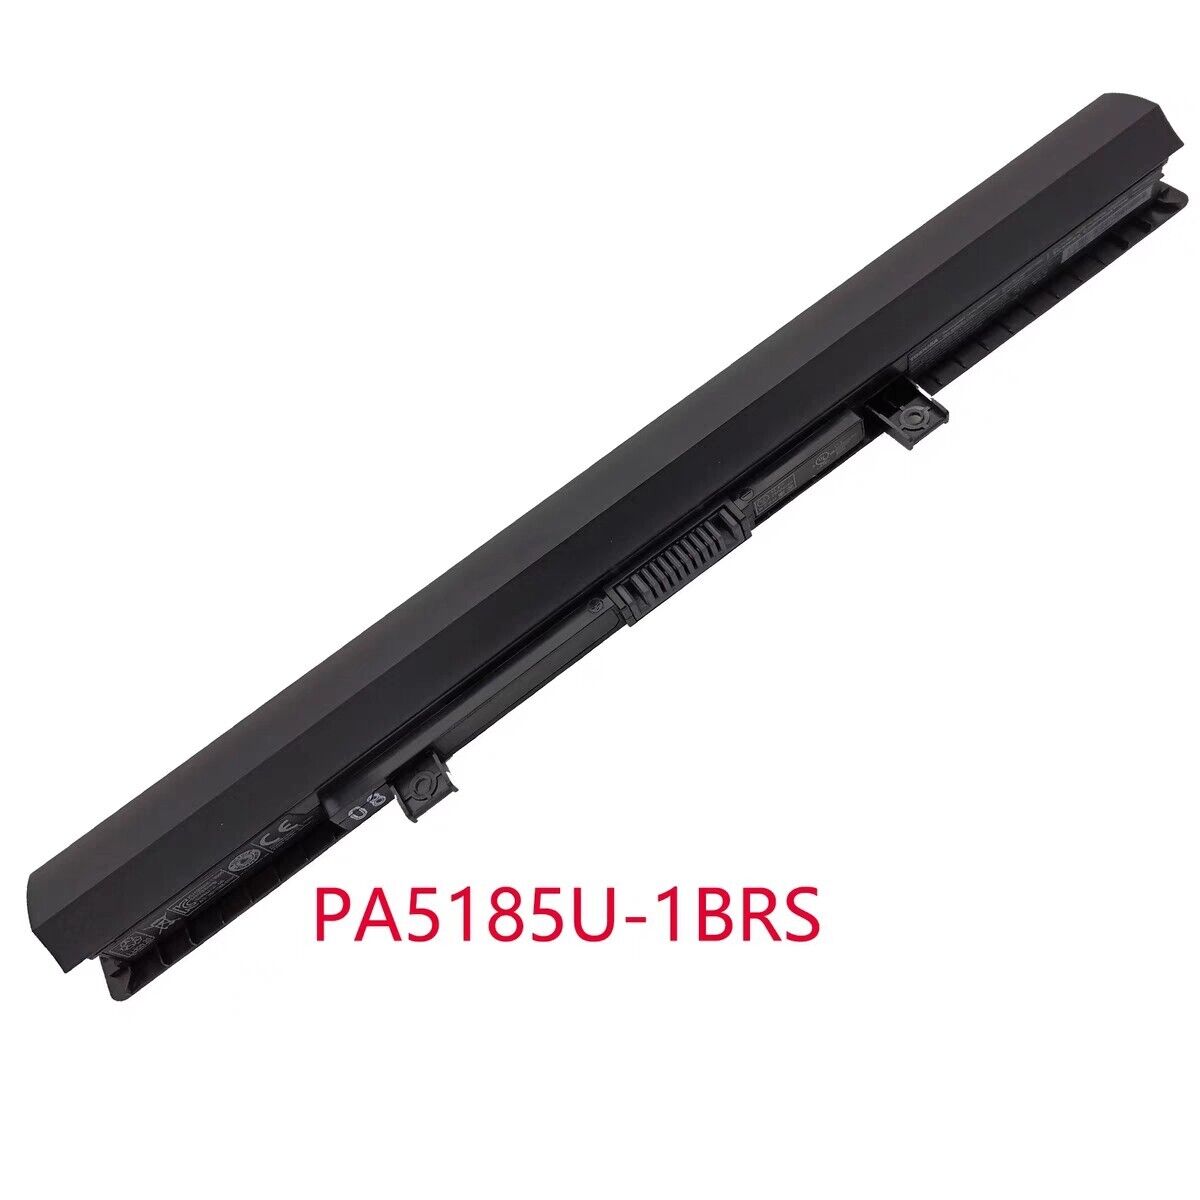 Genuine PA5185U-1BRS Toshiba Laptop Battery PA5186U-1BRS PA5184U-1BRS C55 C55D